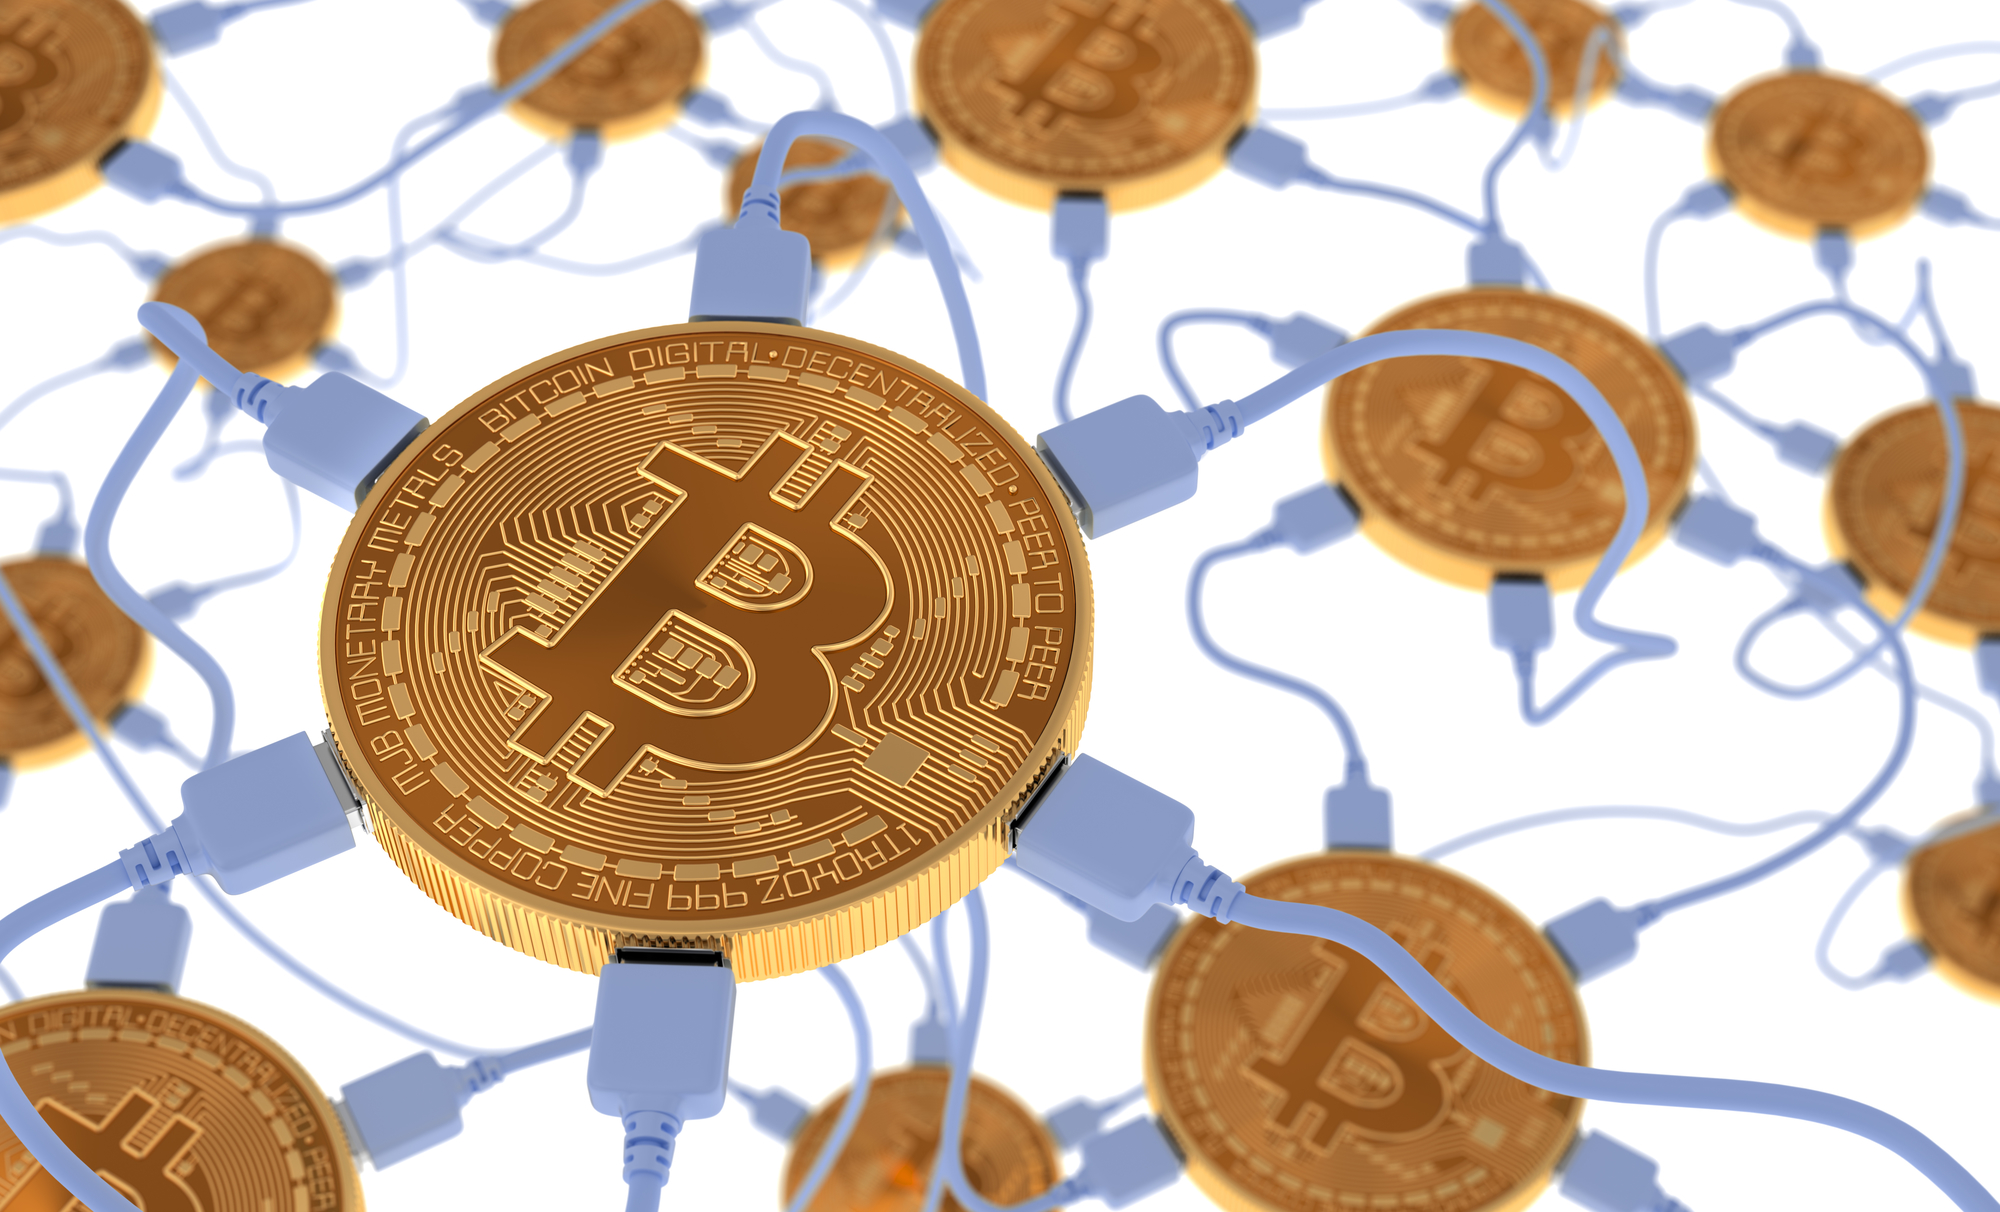 Bitcoin nears important resistance near $7500